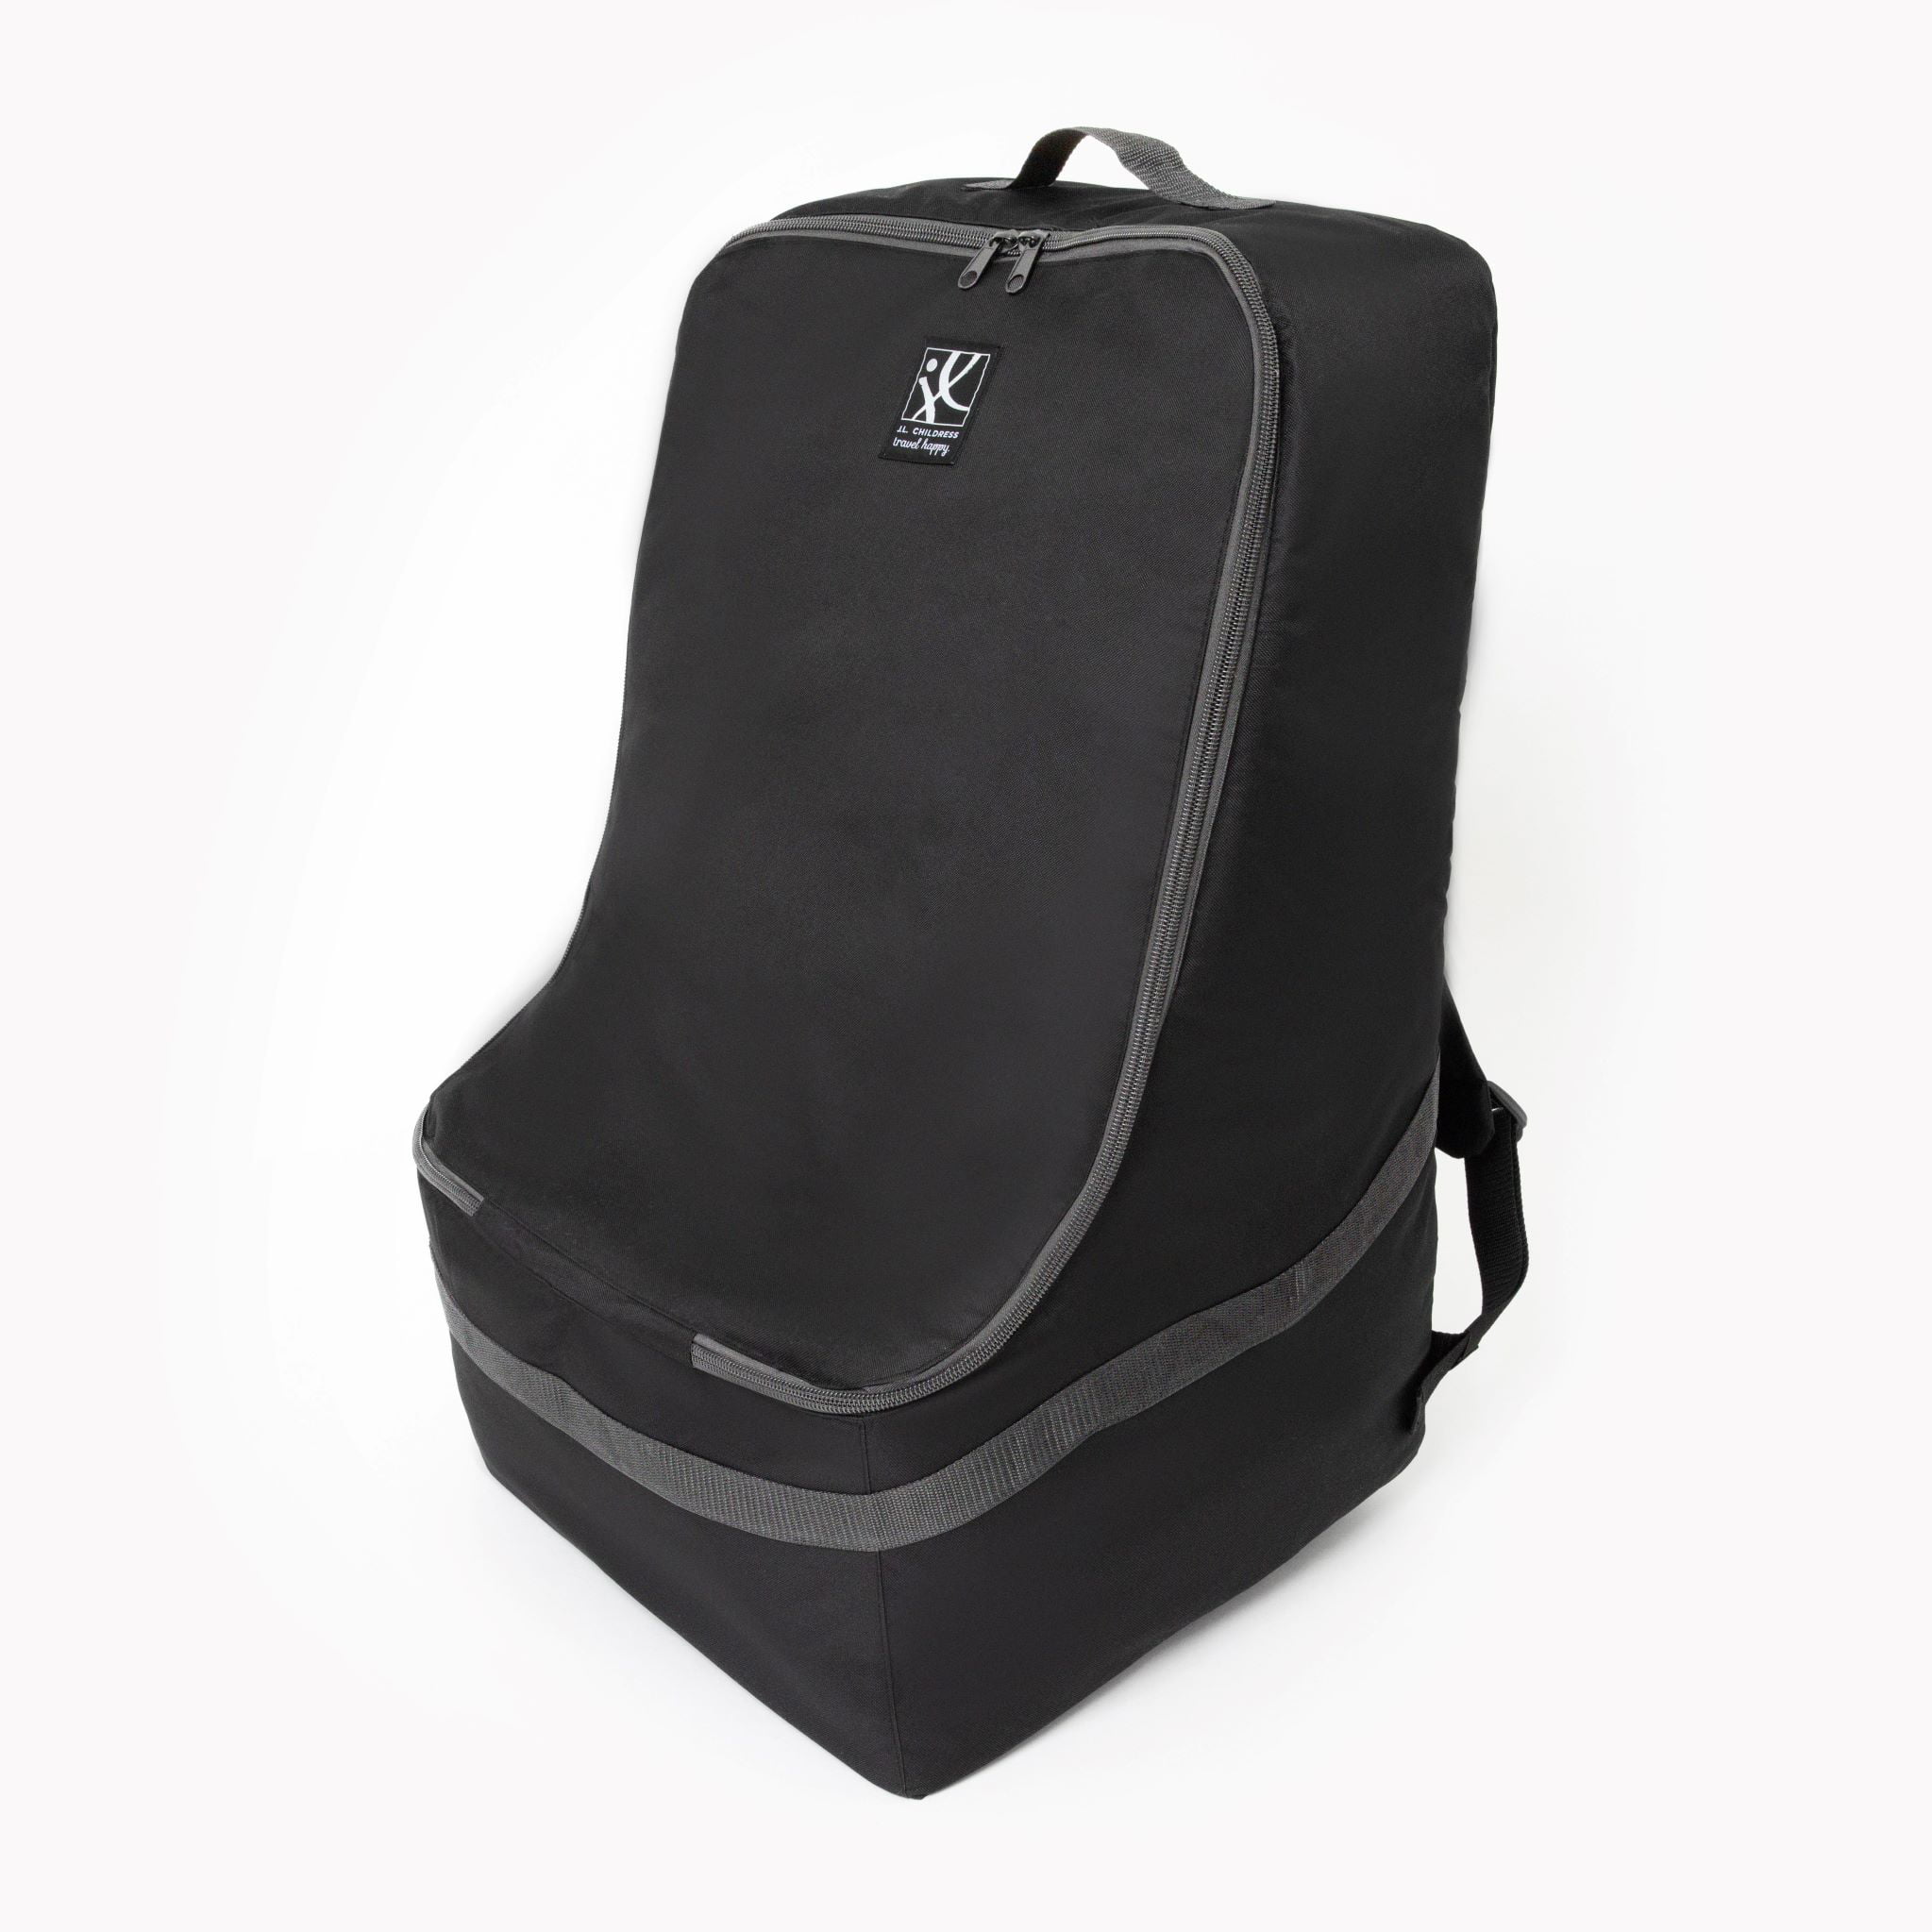 Just in! JL Childress Car seat travel bag, $19.99 #lilposhresale | Instagram